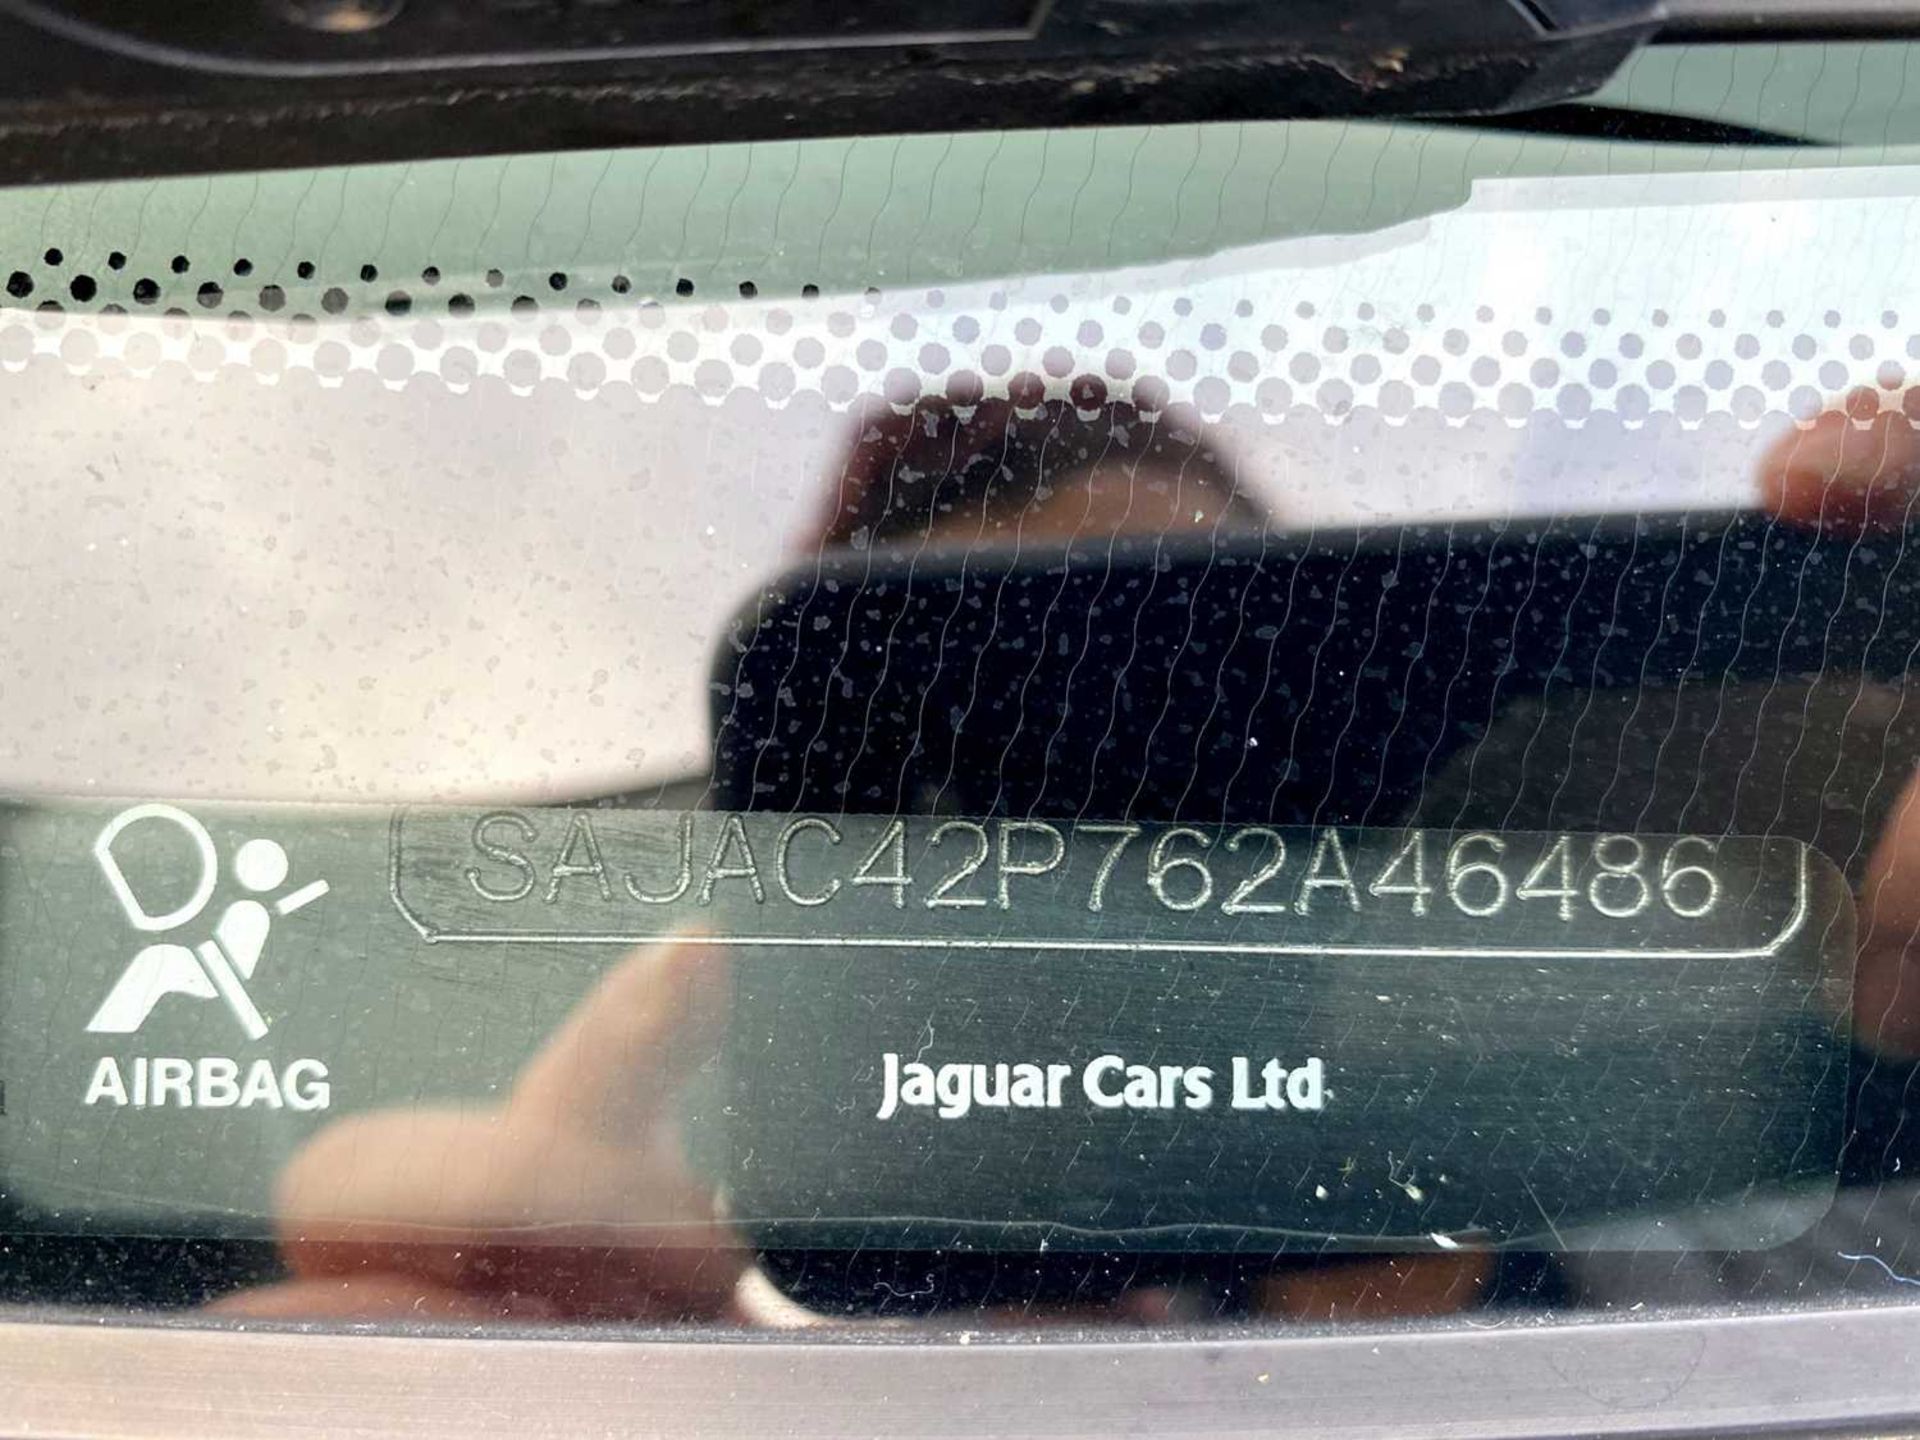 2005 Jaguar XK8 4.2 S Convertible Rare, limited edition model - Image 95 of 100